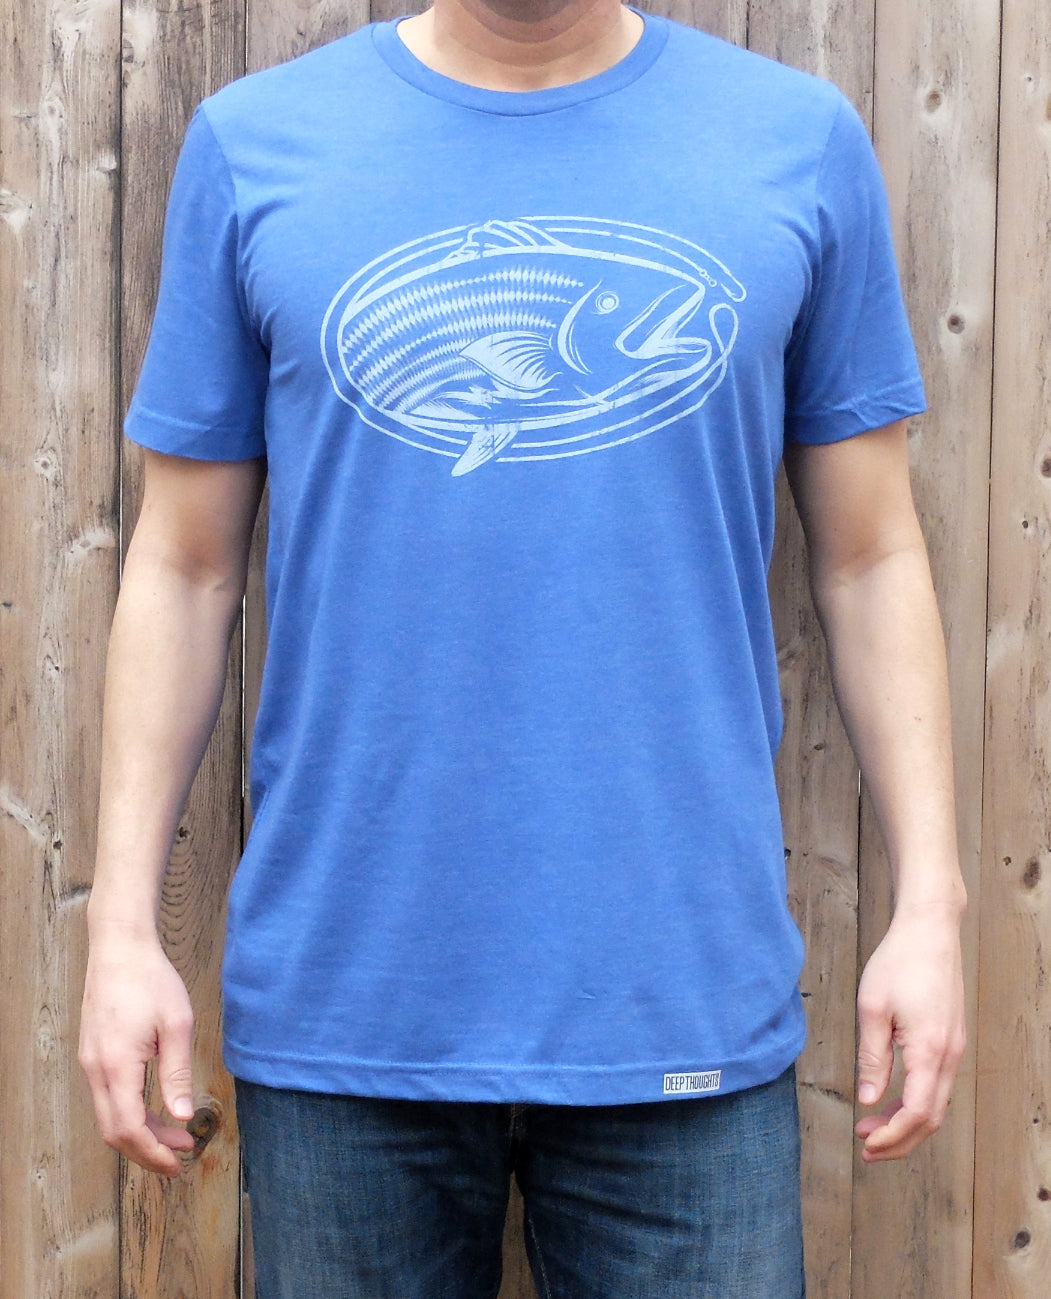 Man wearing heather royal blue t-shirt with white ova-shaped striped bass fishing graphic